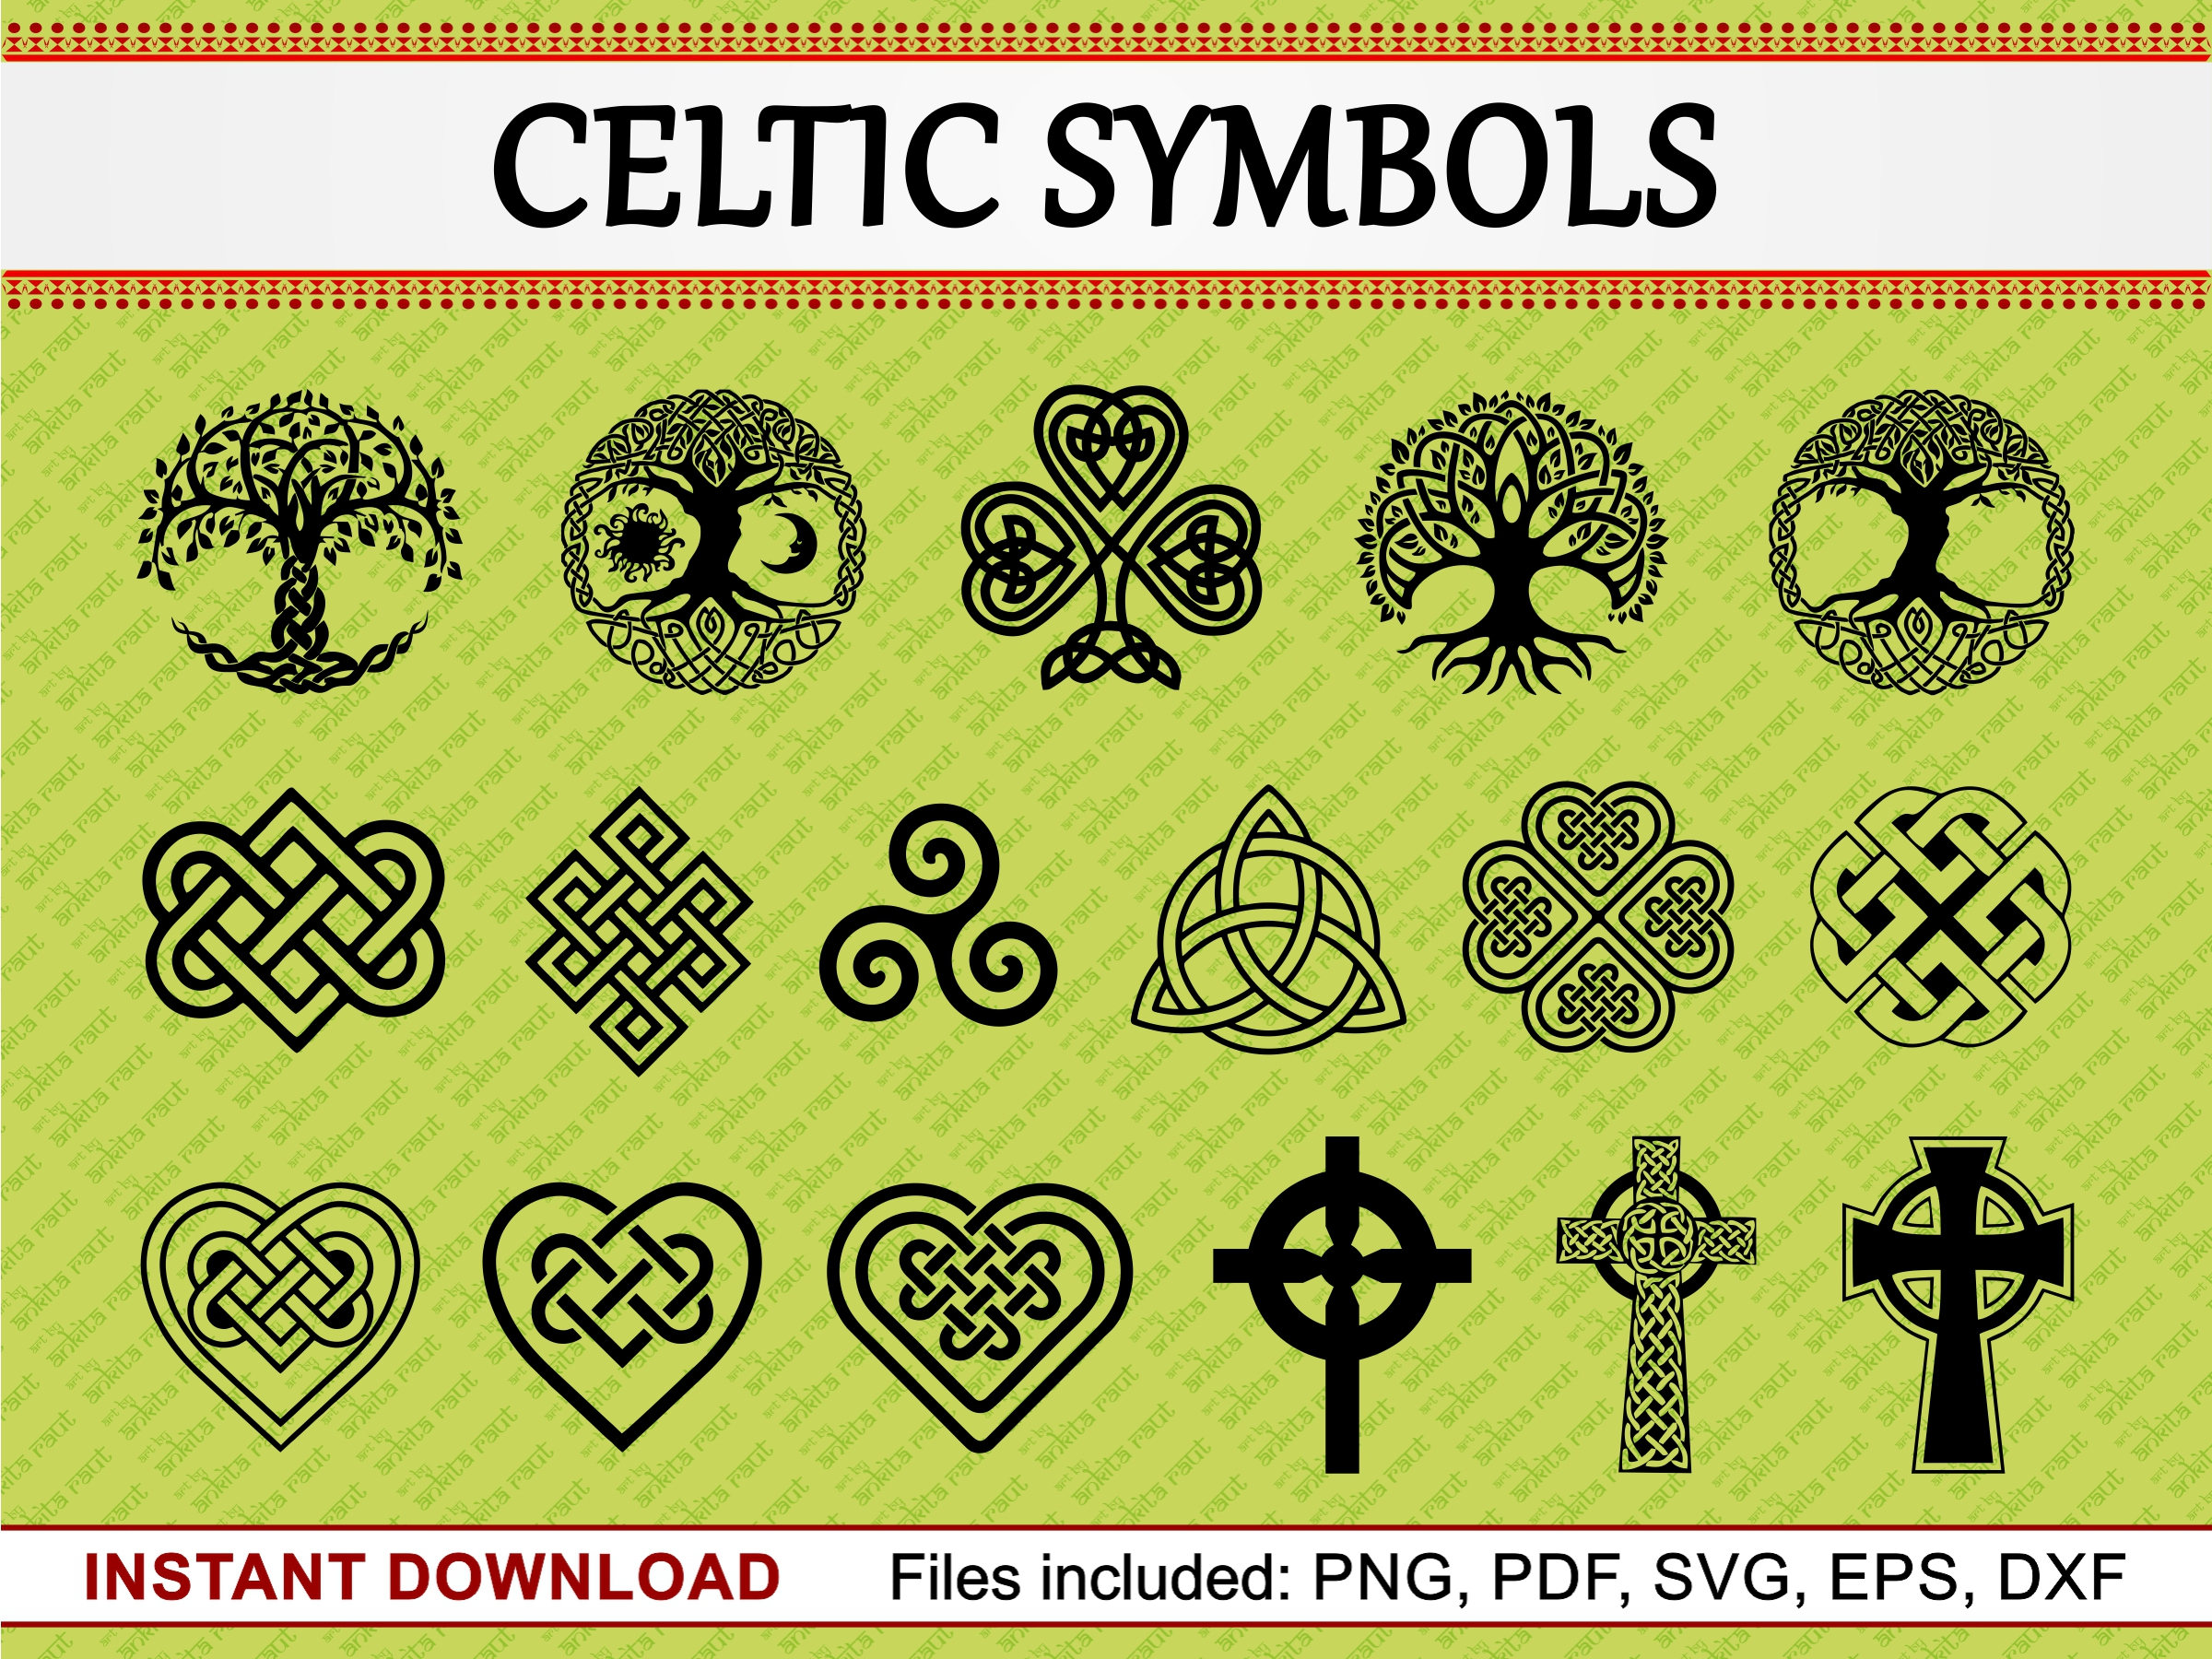 Download Celtic Symbols Set of 17 Commercial Use Cliparts Celtic